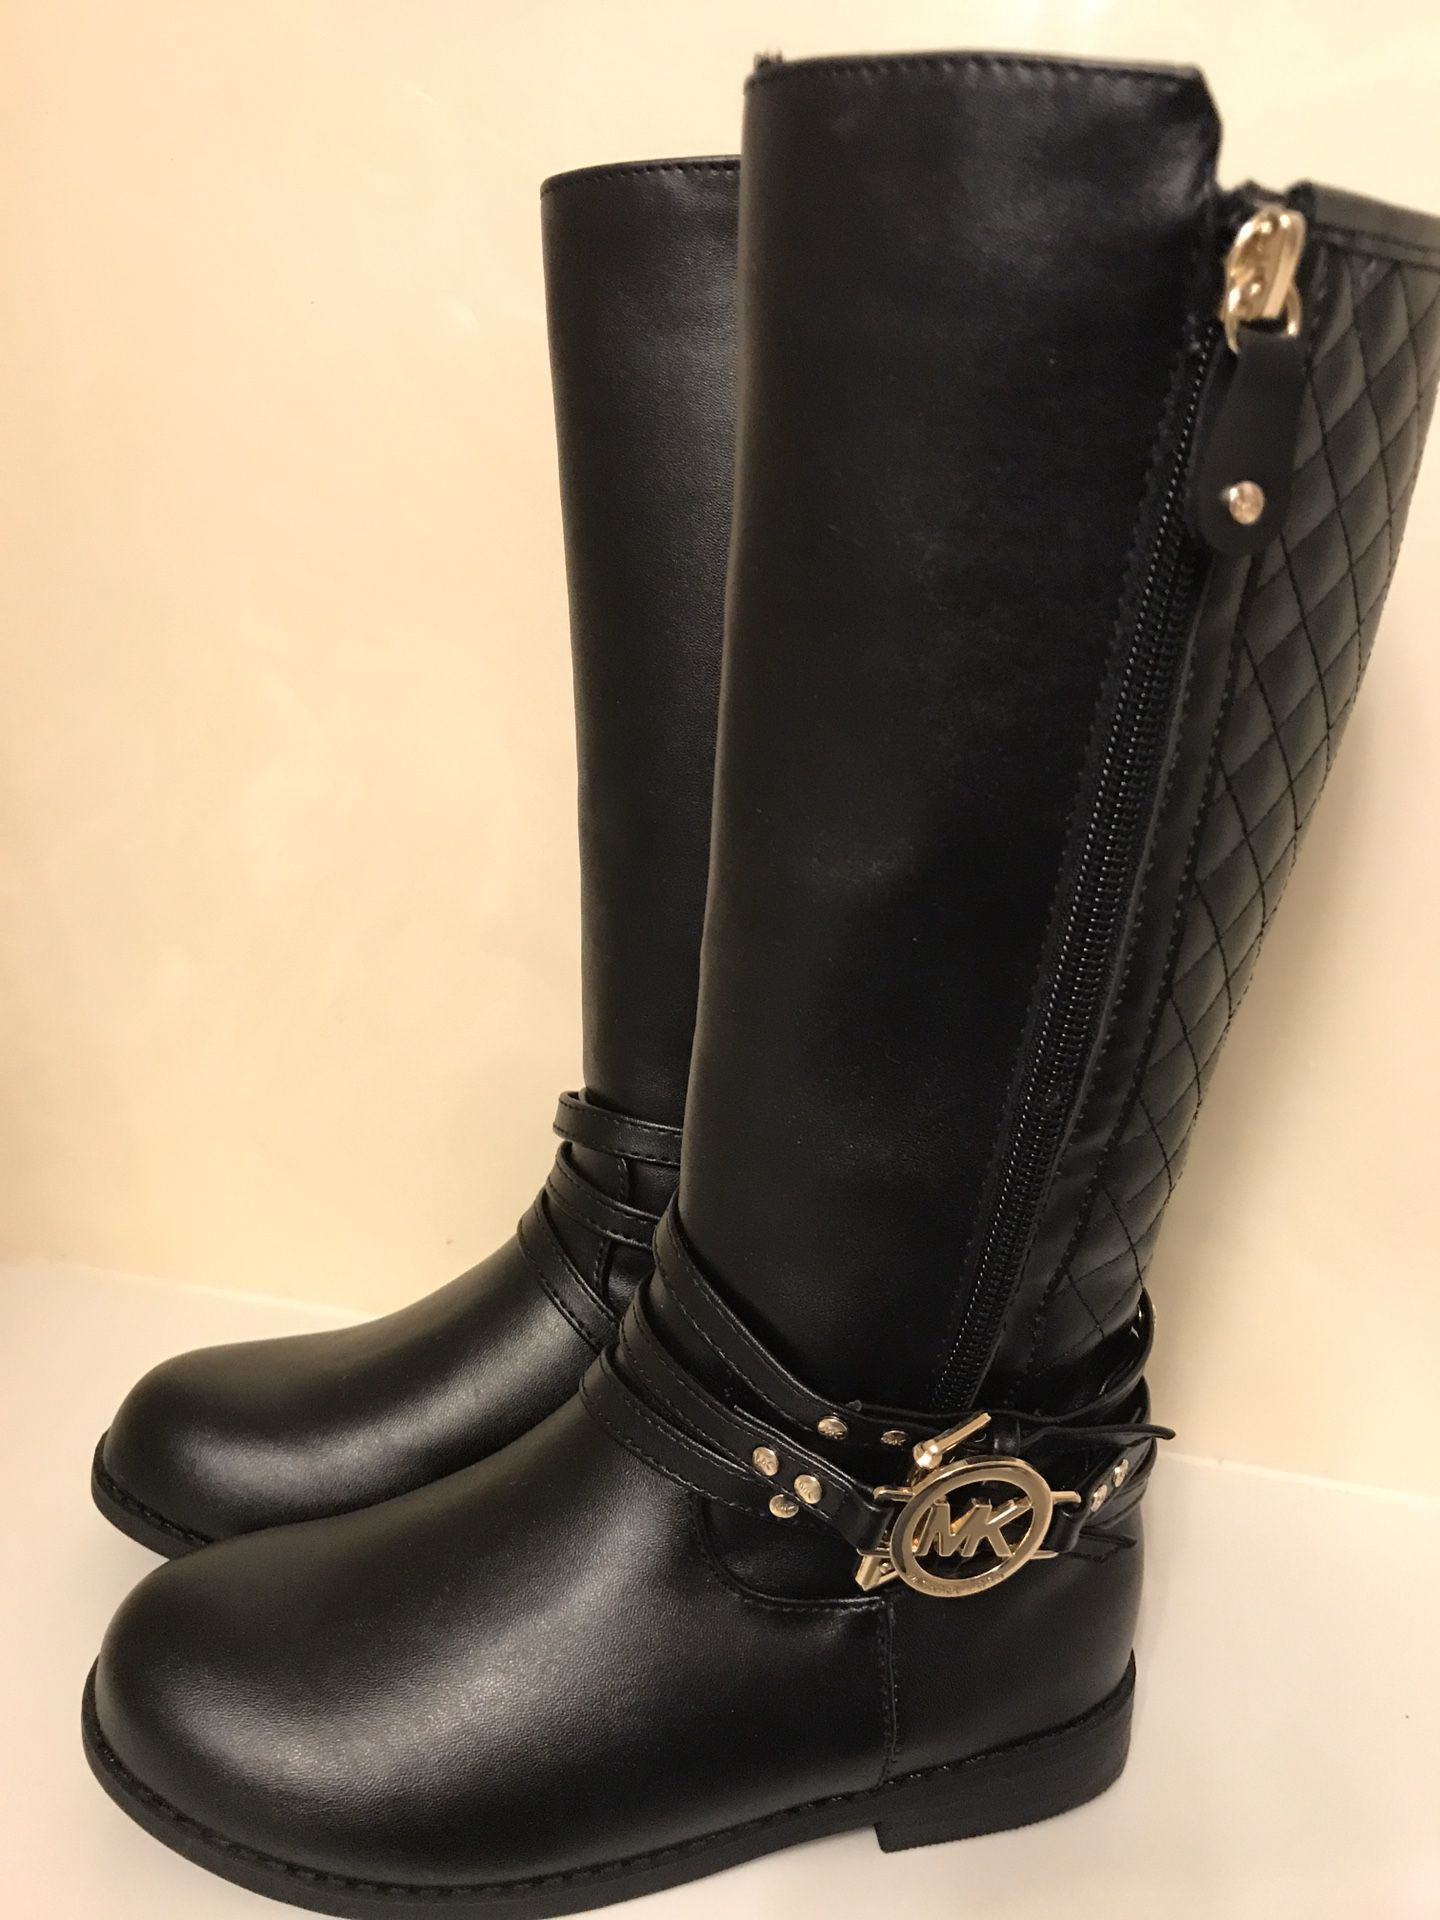 Brand new, girls size 12 Michael Kors Tall Black Boots